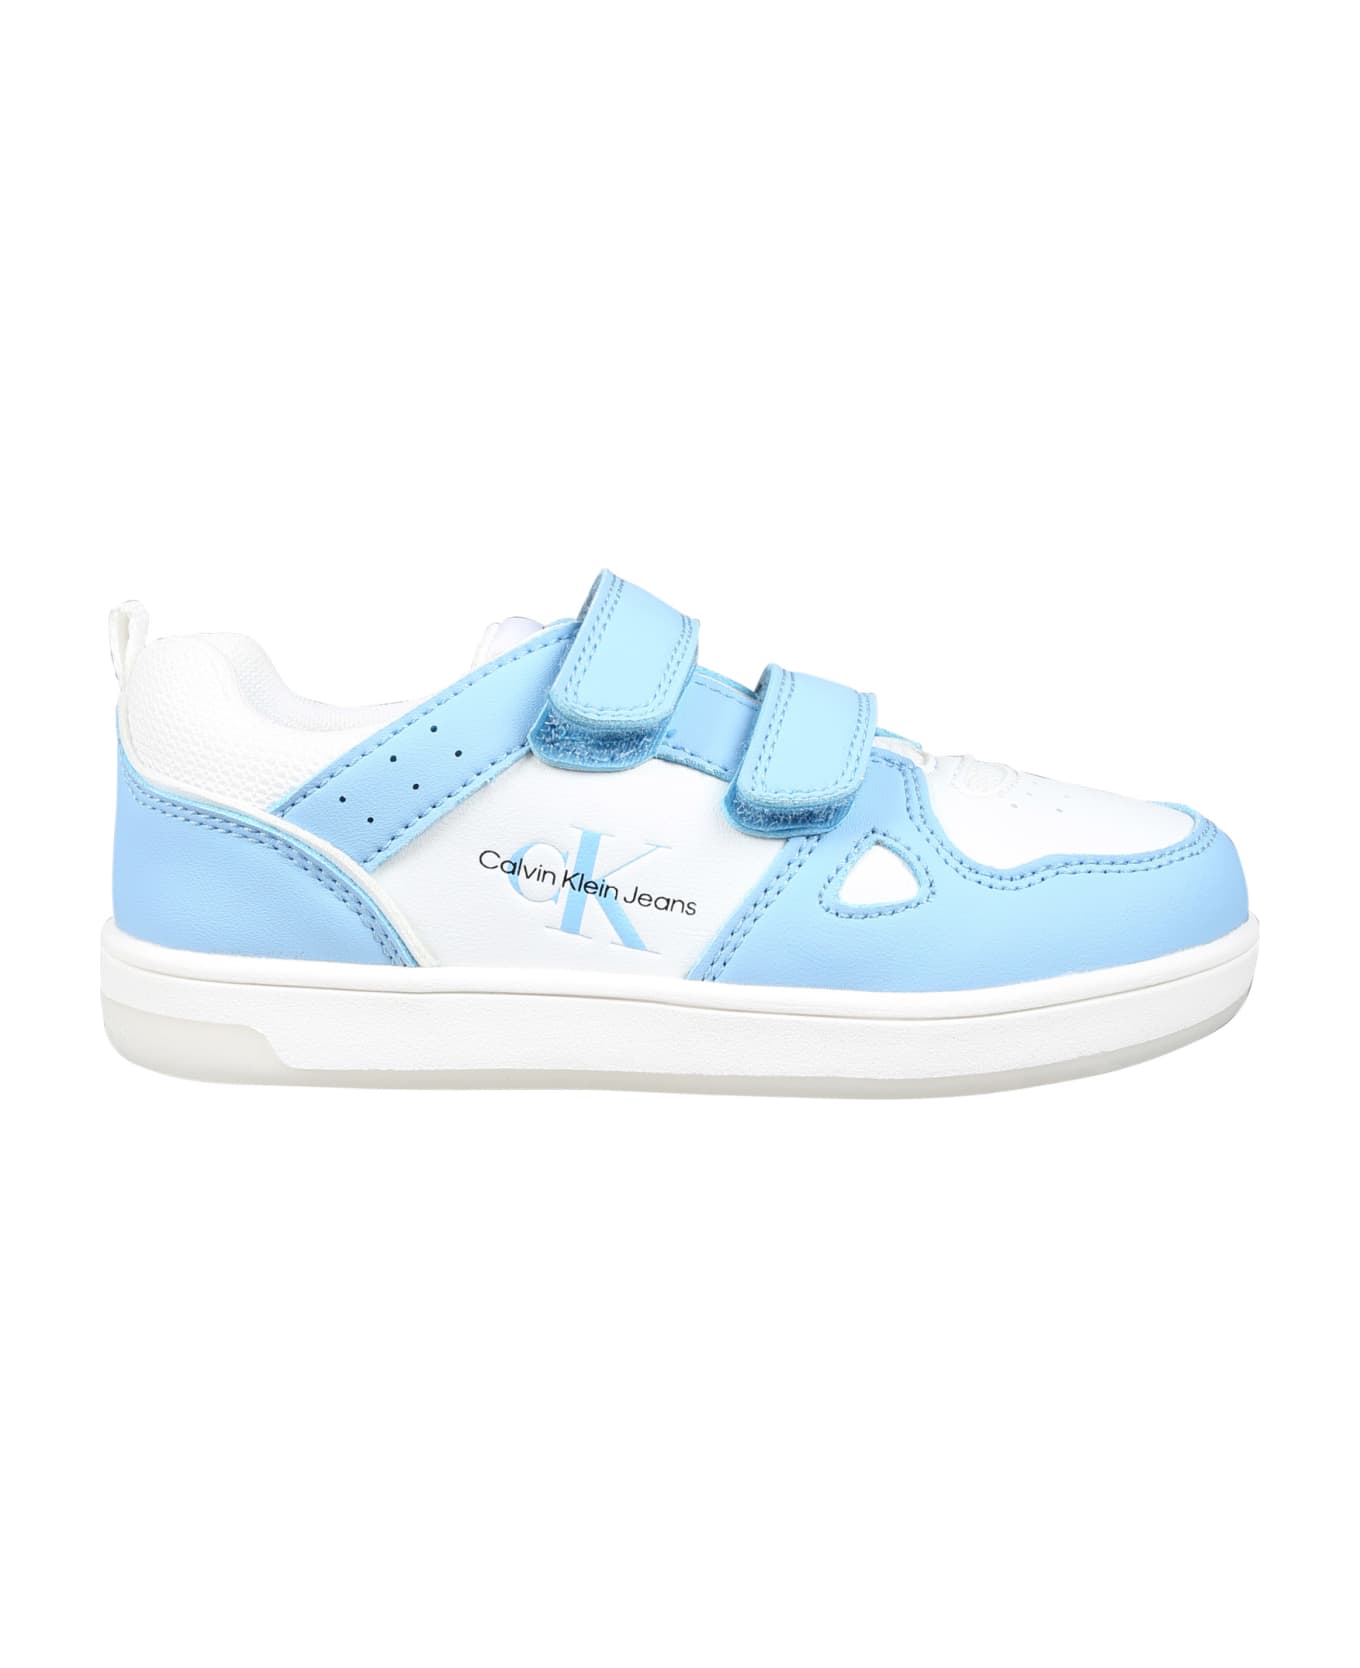 Calvin Klein Light Blue Sneakers For Kids With Logo - Light Blue